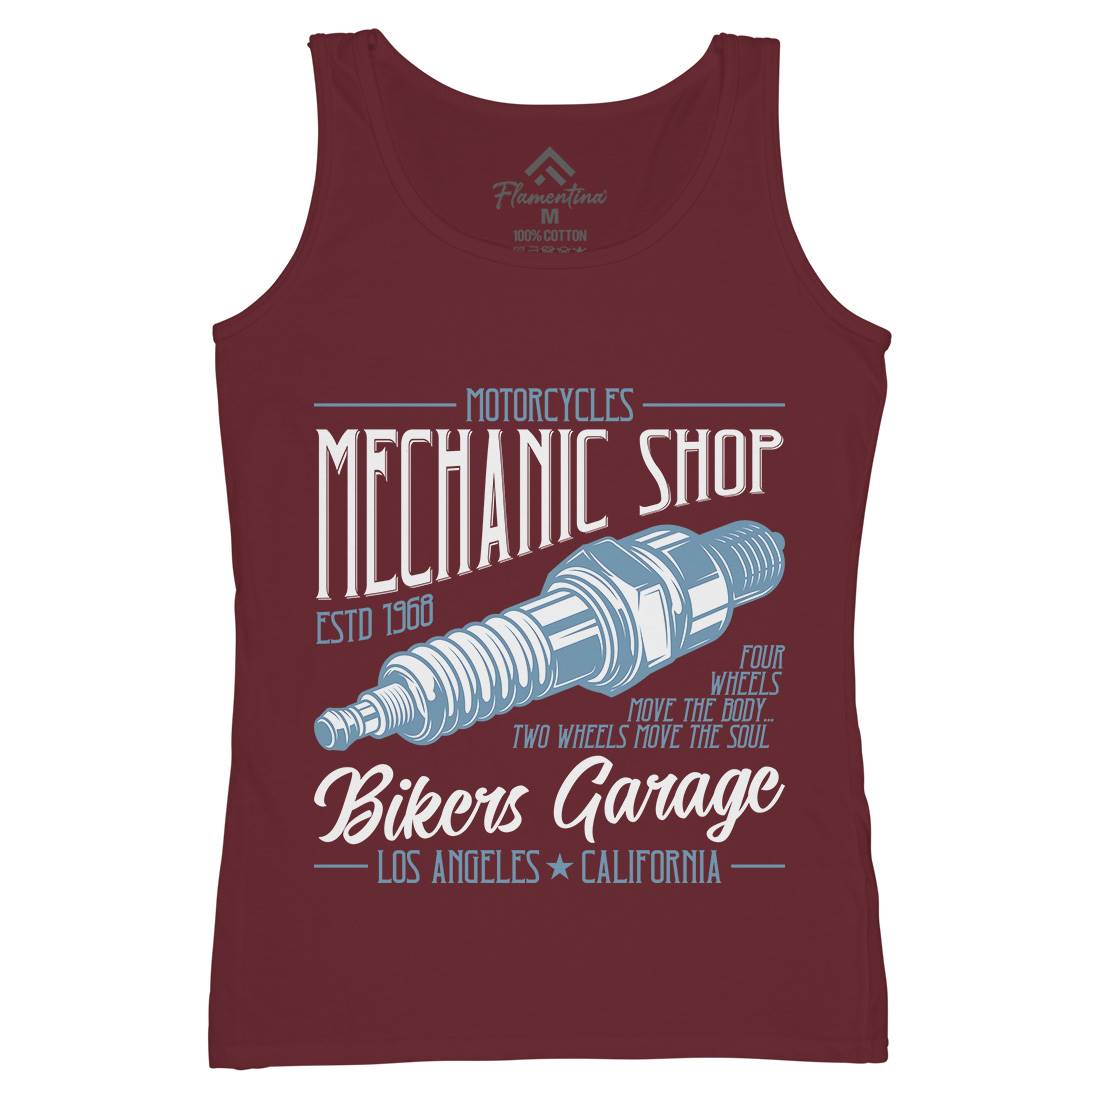 Mechanic Shop Womens Organic Tank Top Vest Motorcycles B836